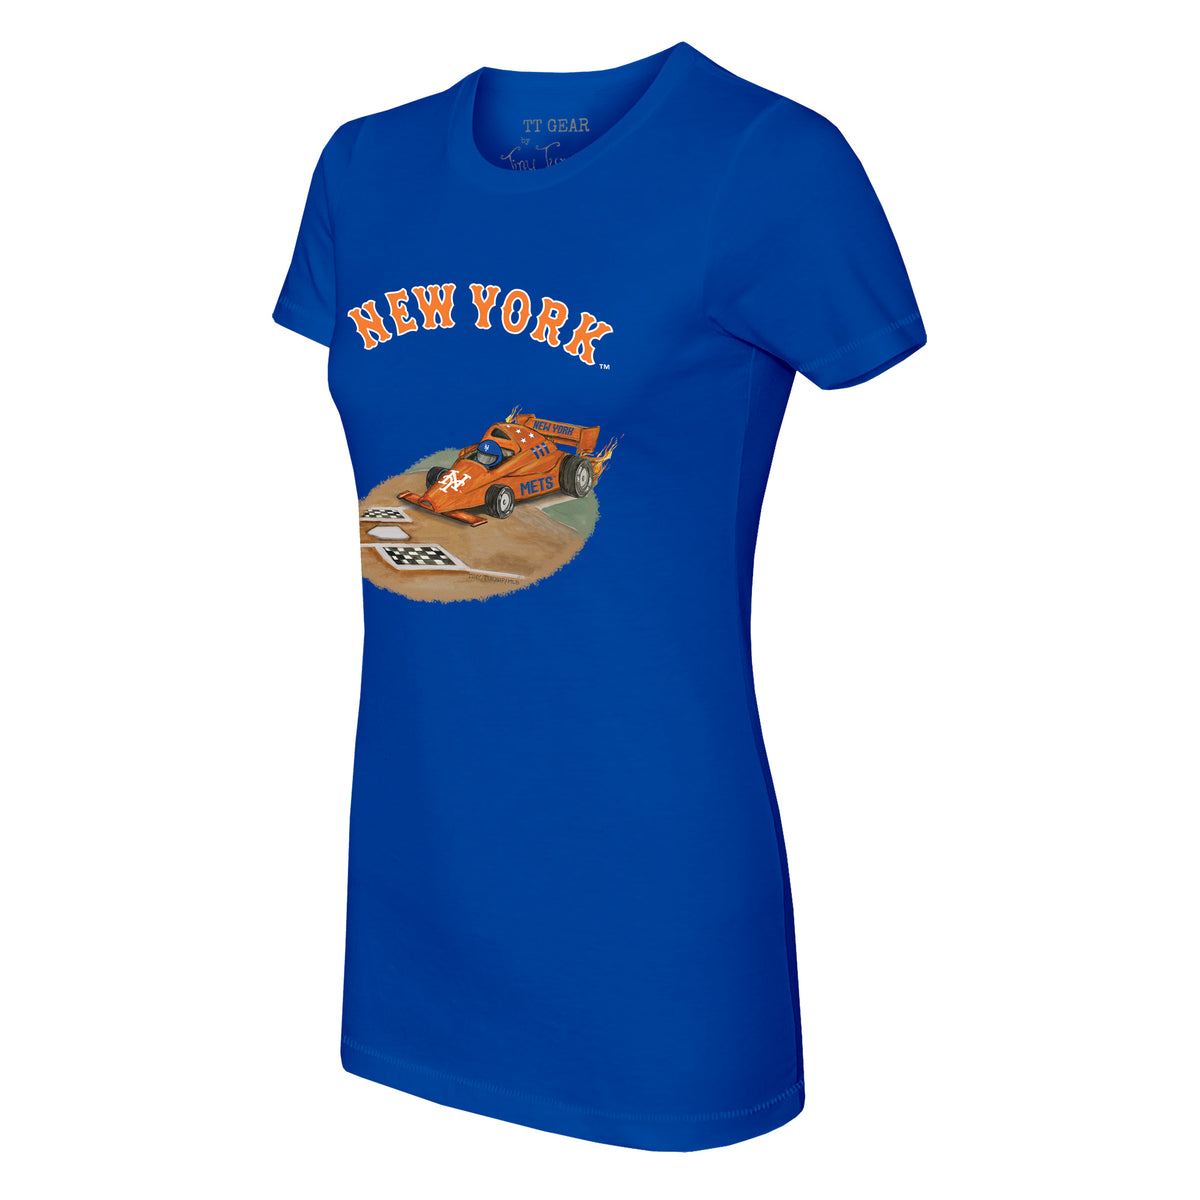 New York Mets Race Car Tee Shirt